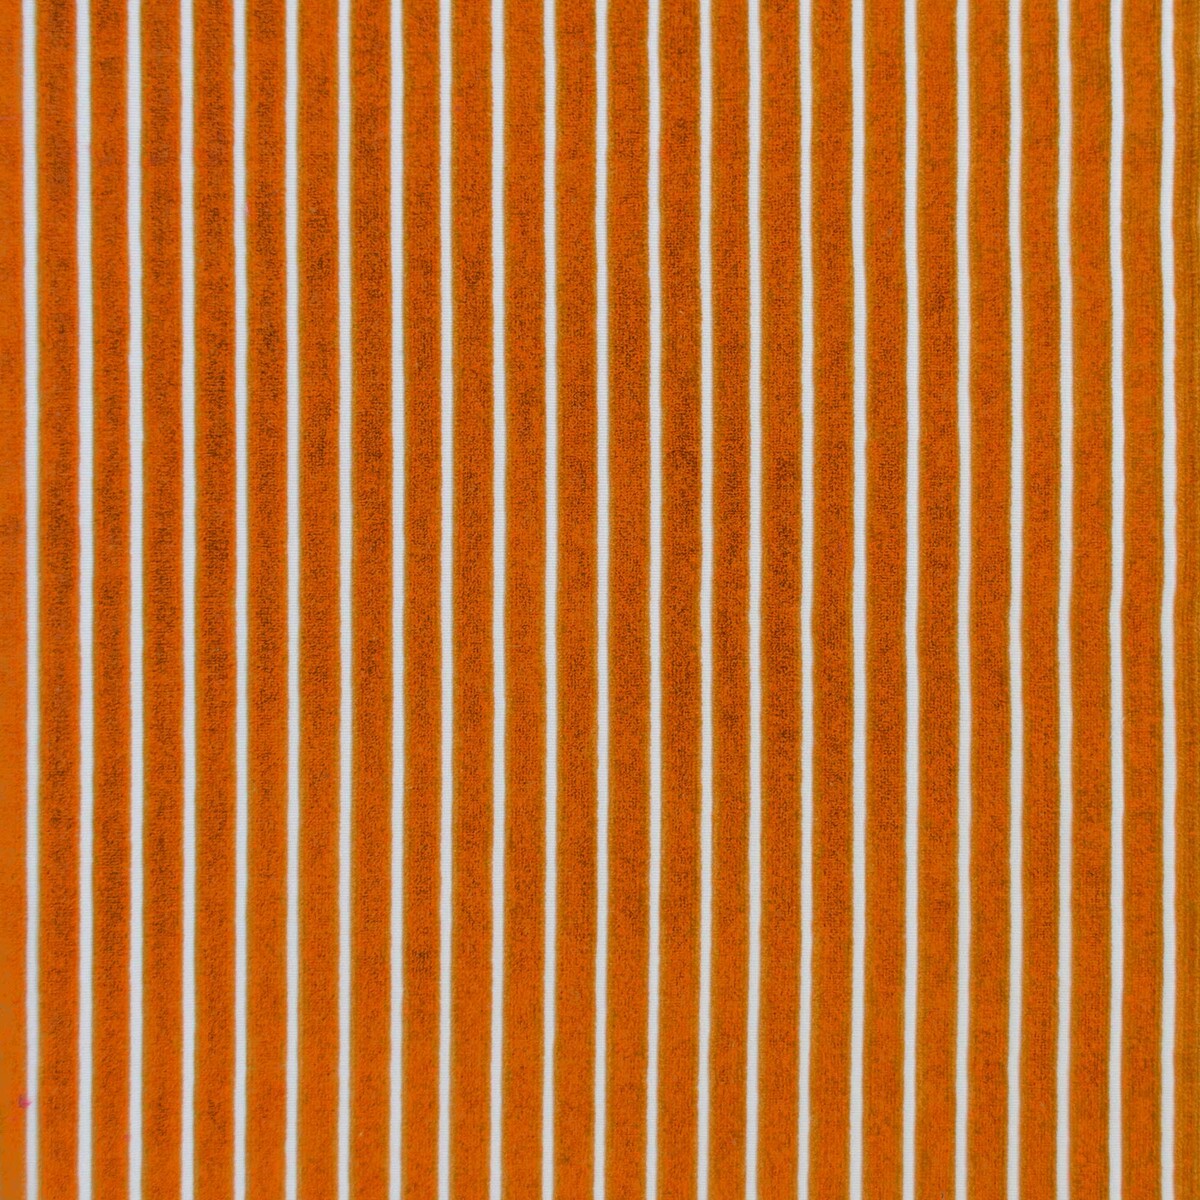 Mayrit fabric in zanahoria color - pattern LCT1111.020.0 - by Gaston y Daniela in the Lorenzo Castillo IX Hesperia collection